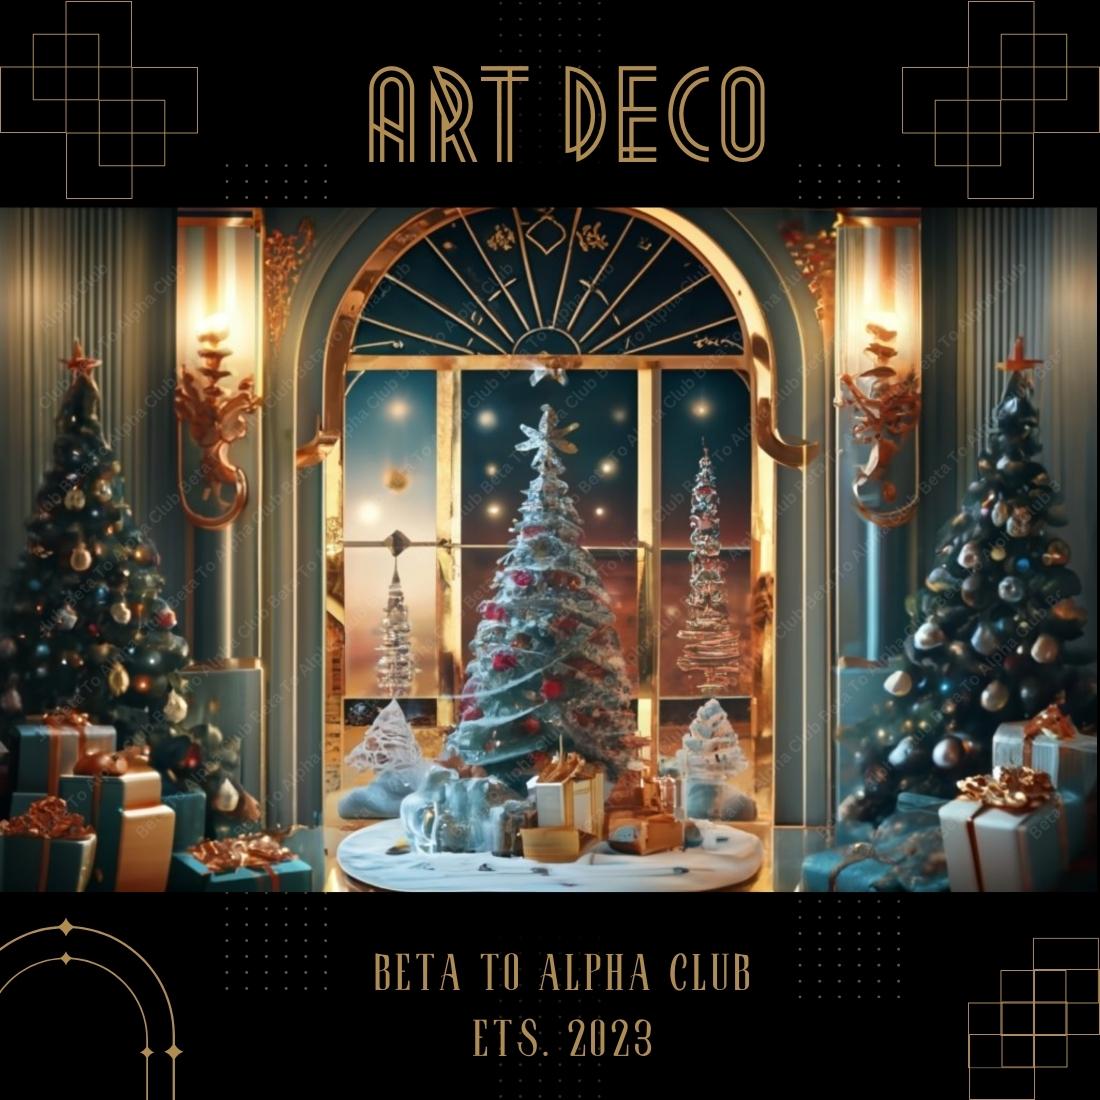 Christmas Art Deco Digital Backgrounds preview image.